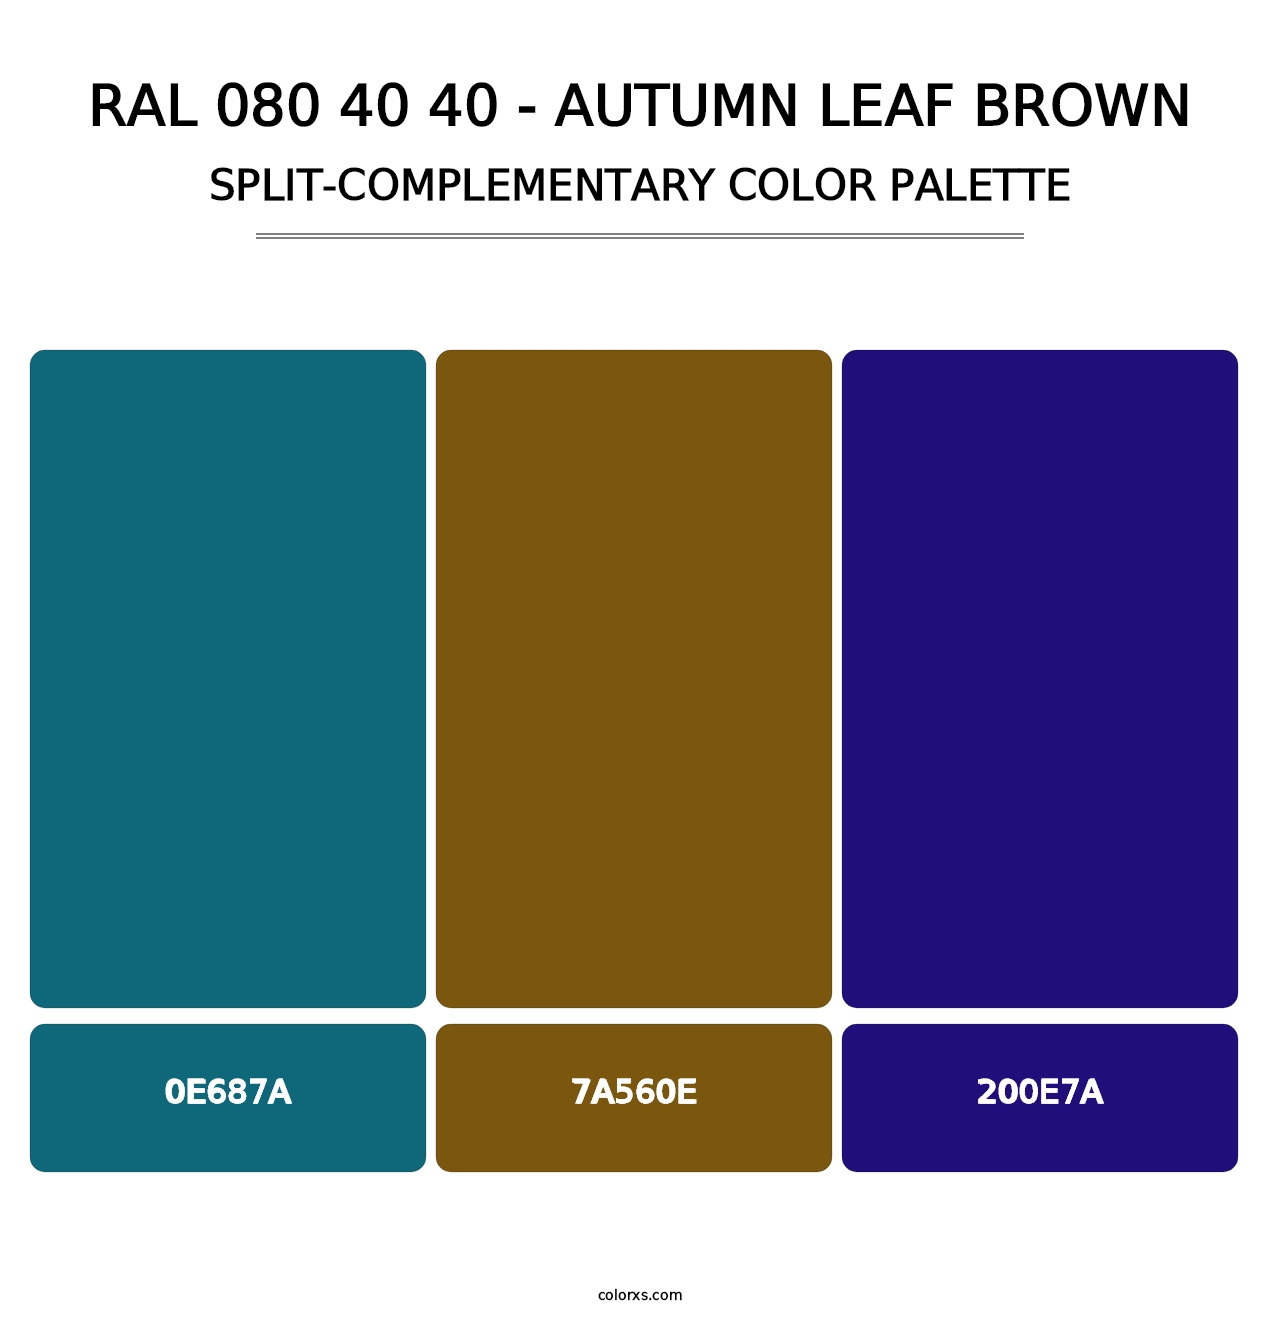 RAL 080 40 40 - Autumn Leaf Brown - Split-Complementary Color Palette